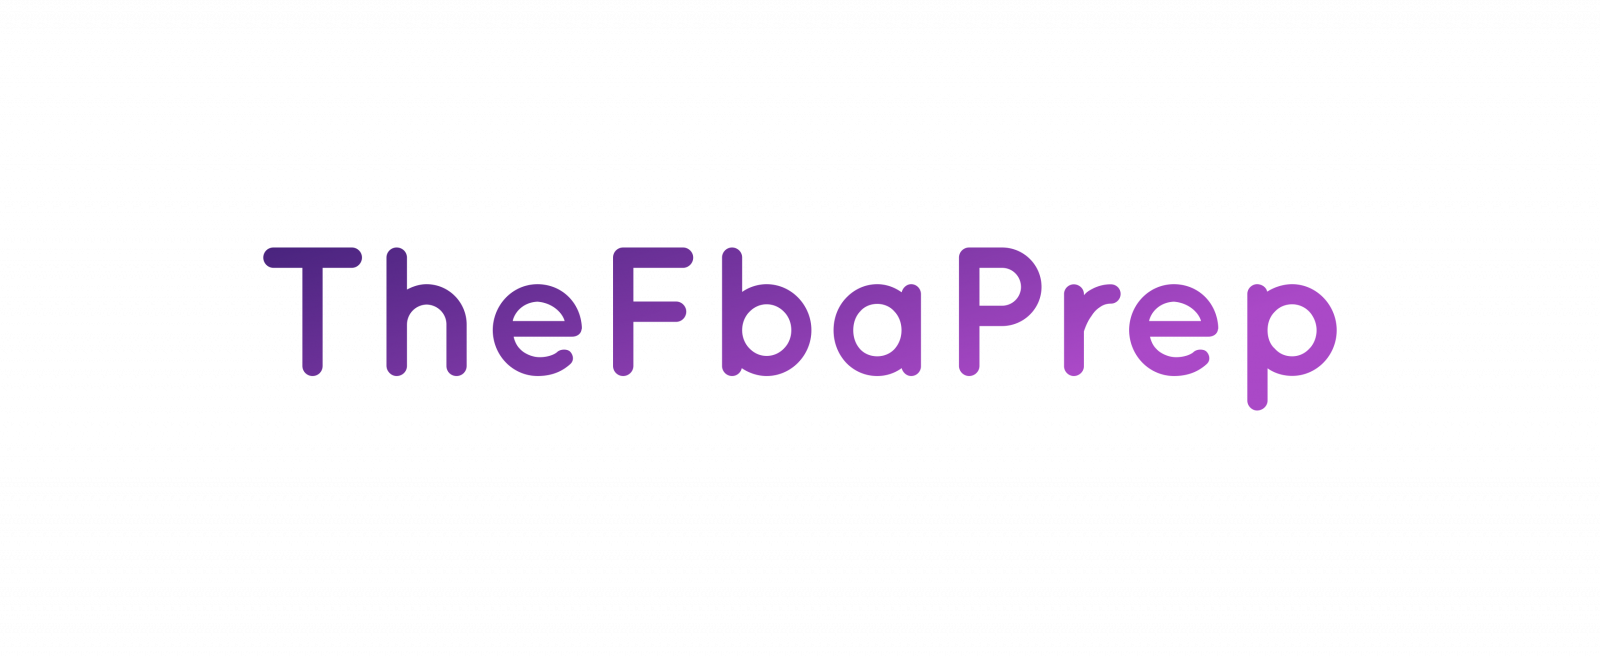 TheFbaPrep Fulfilment and FBA Prep 